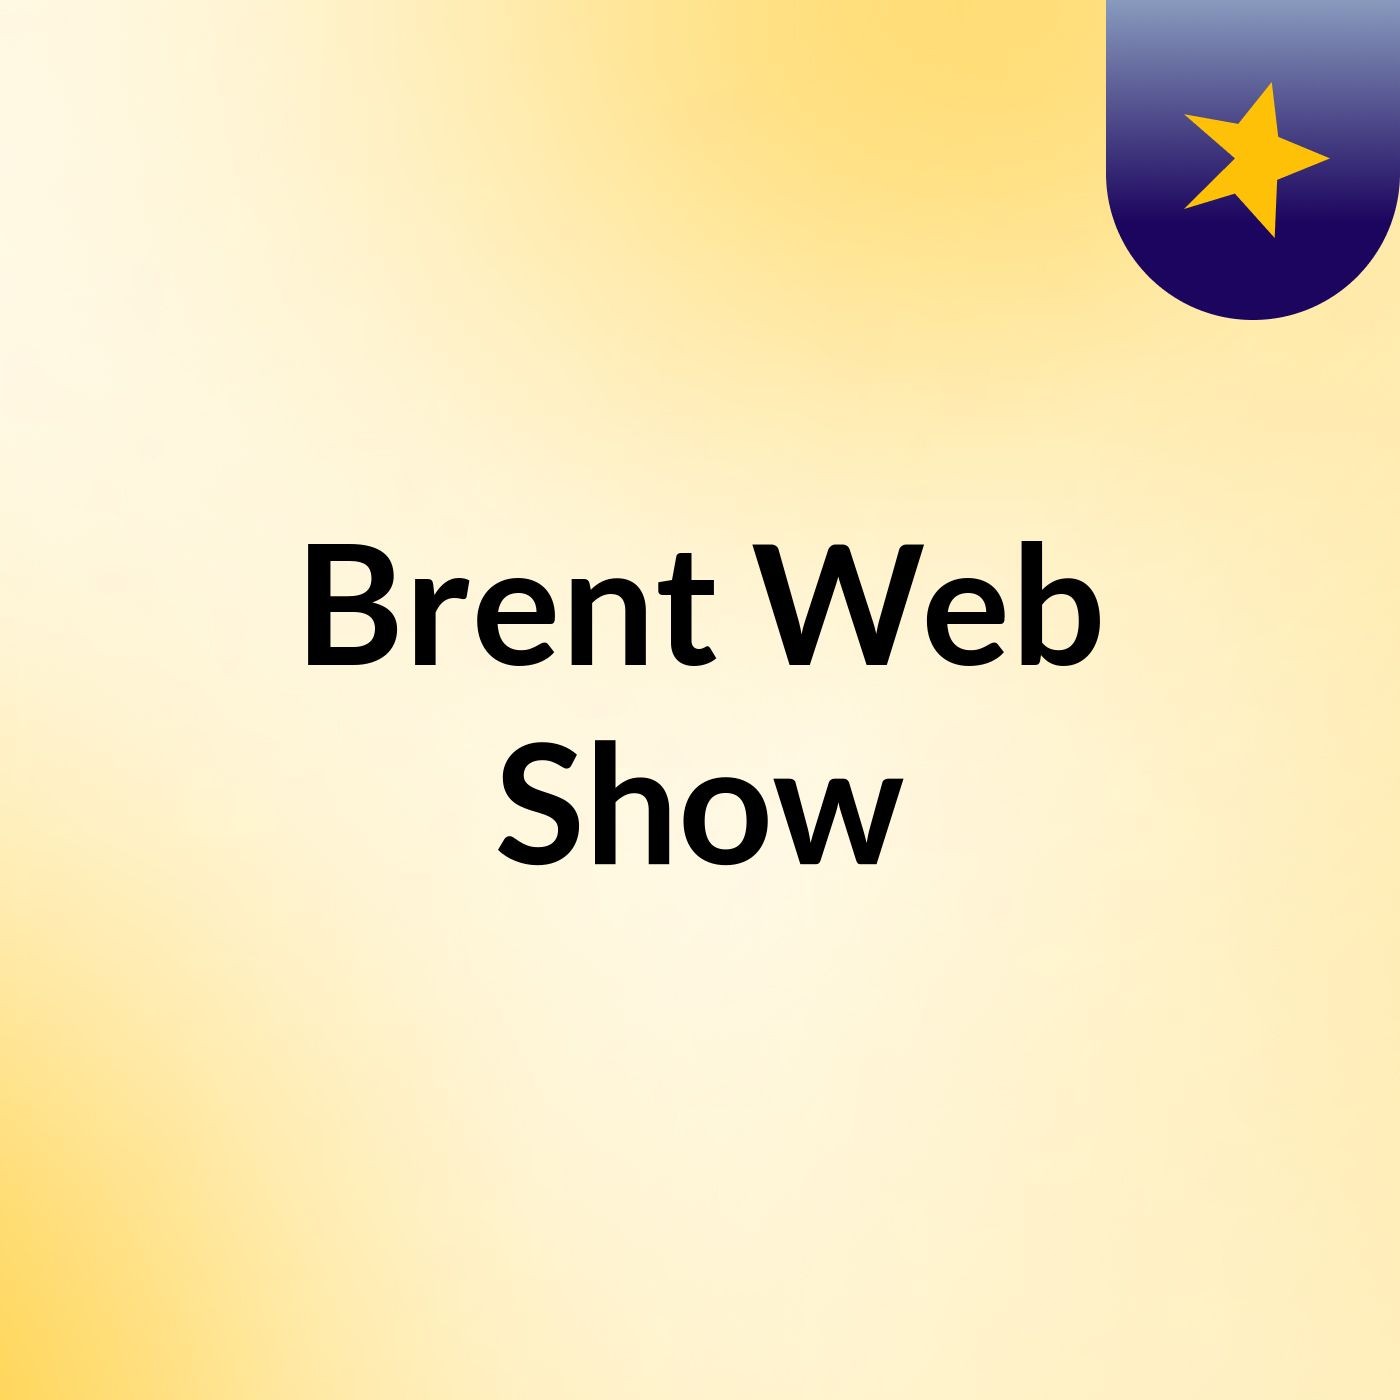 Brent Web Show